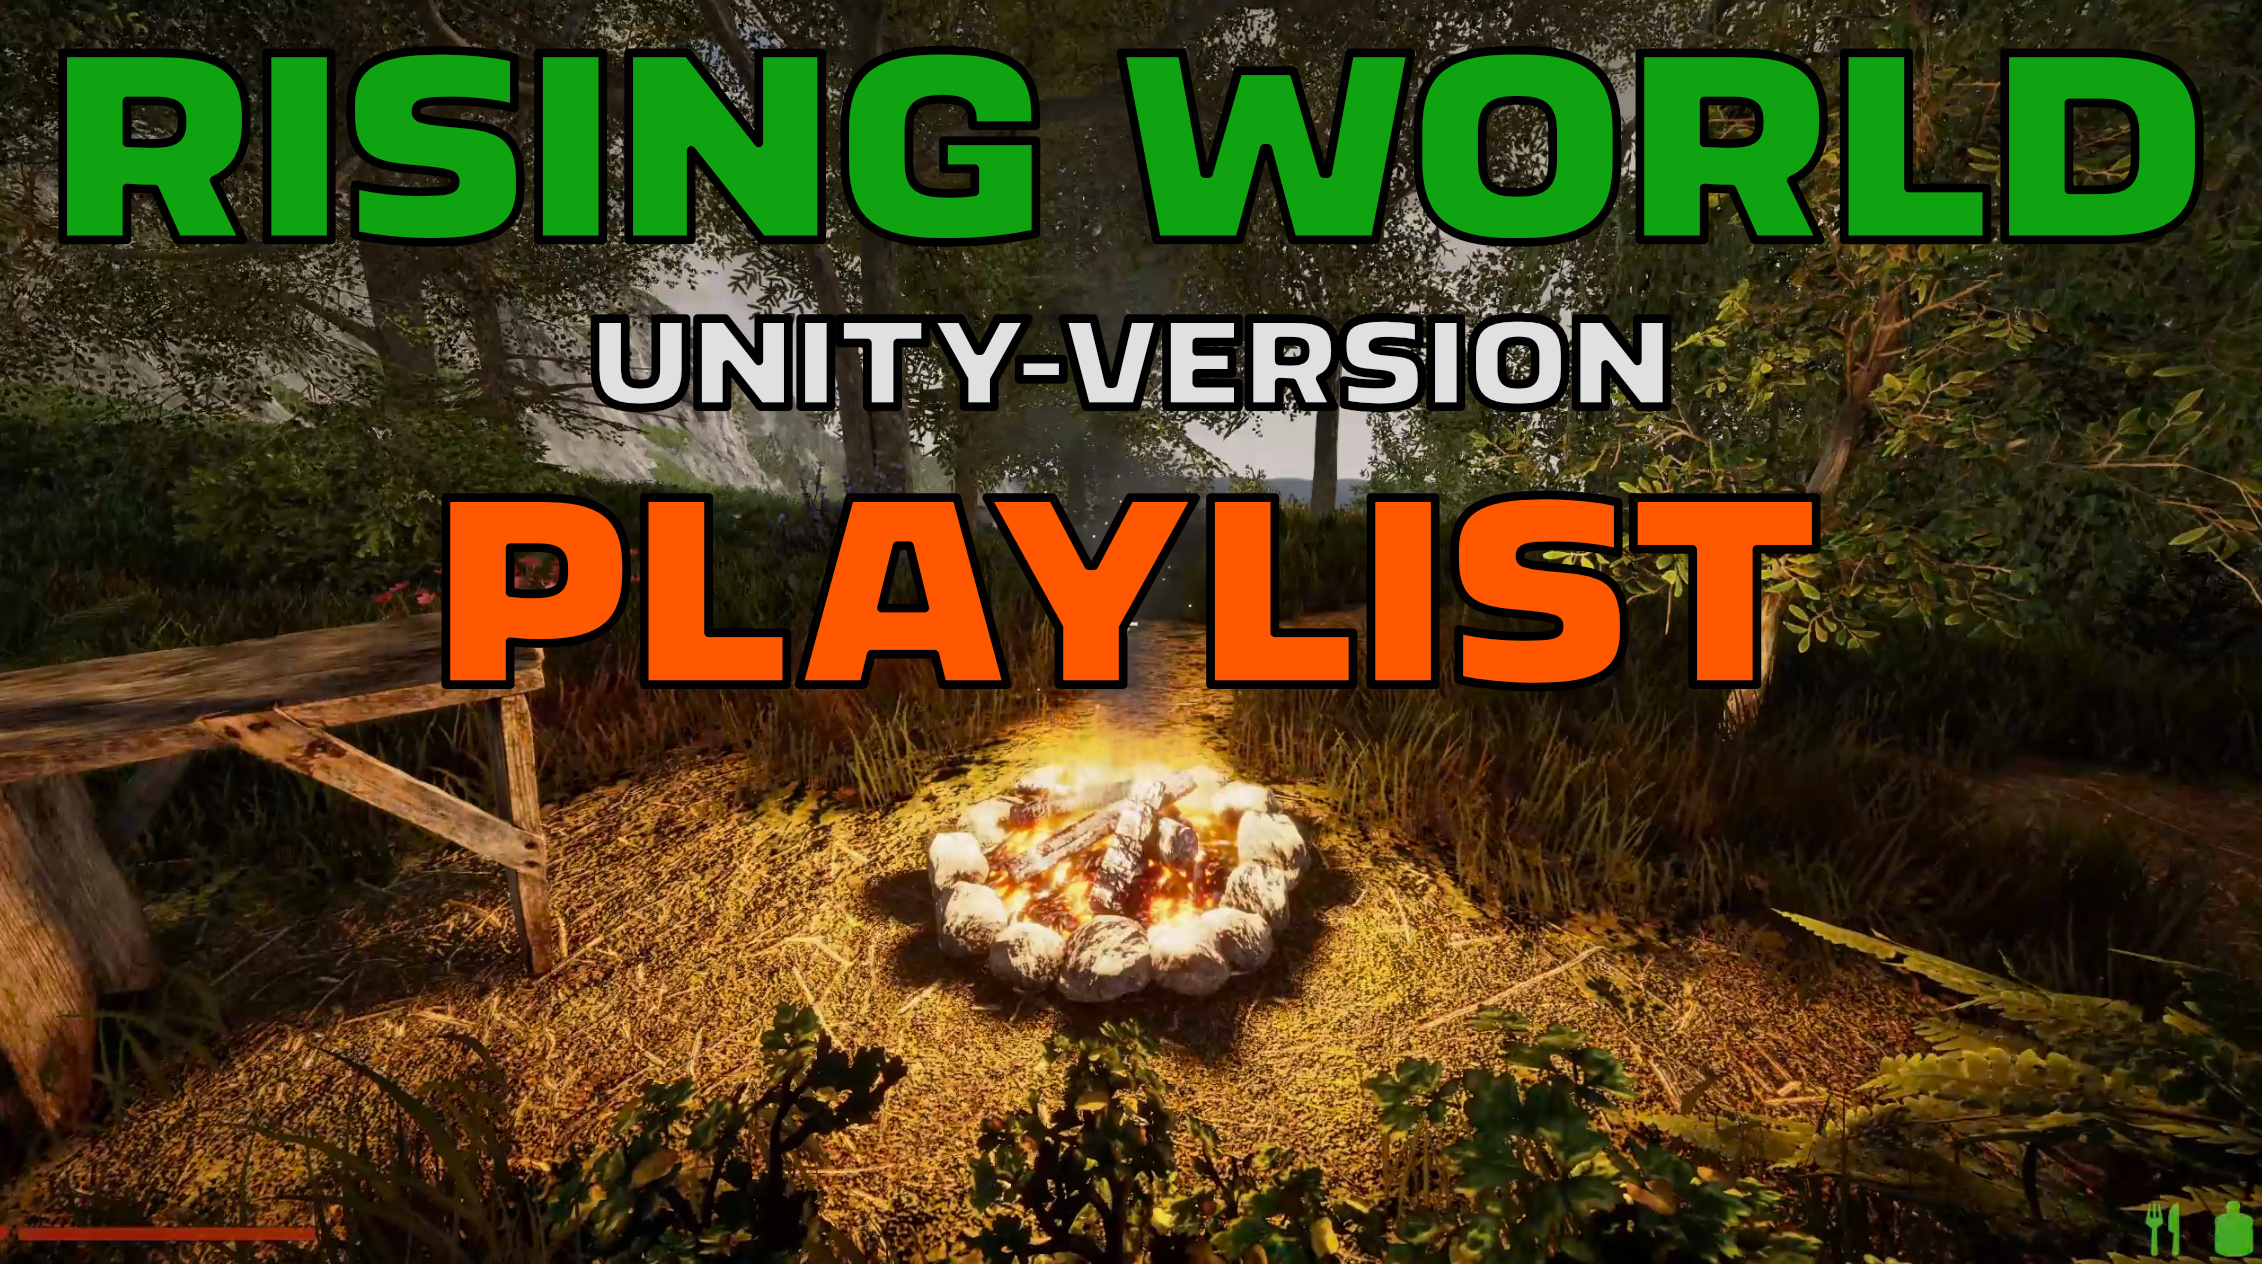 Rising World Unity Version Playlist